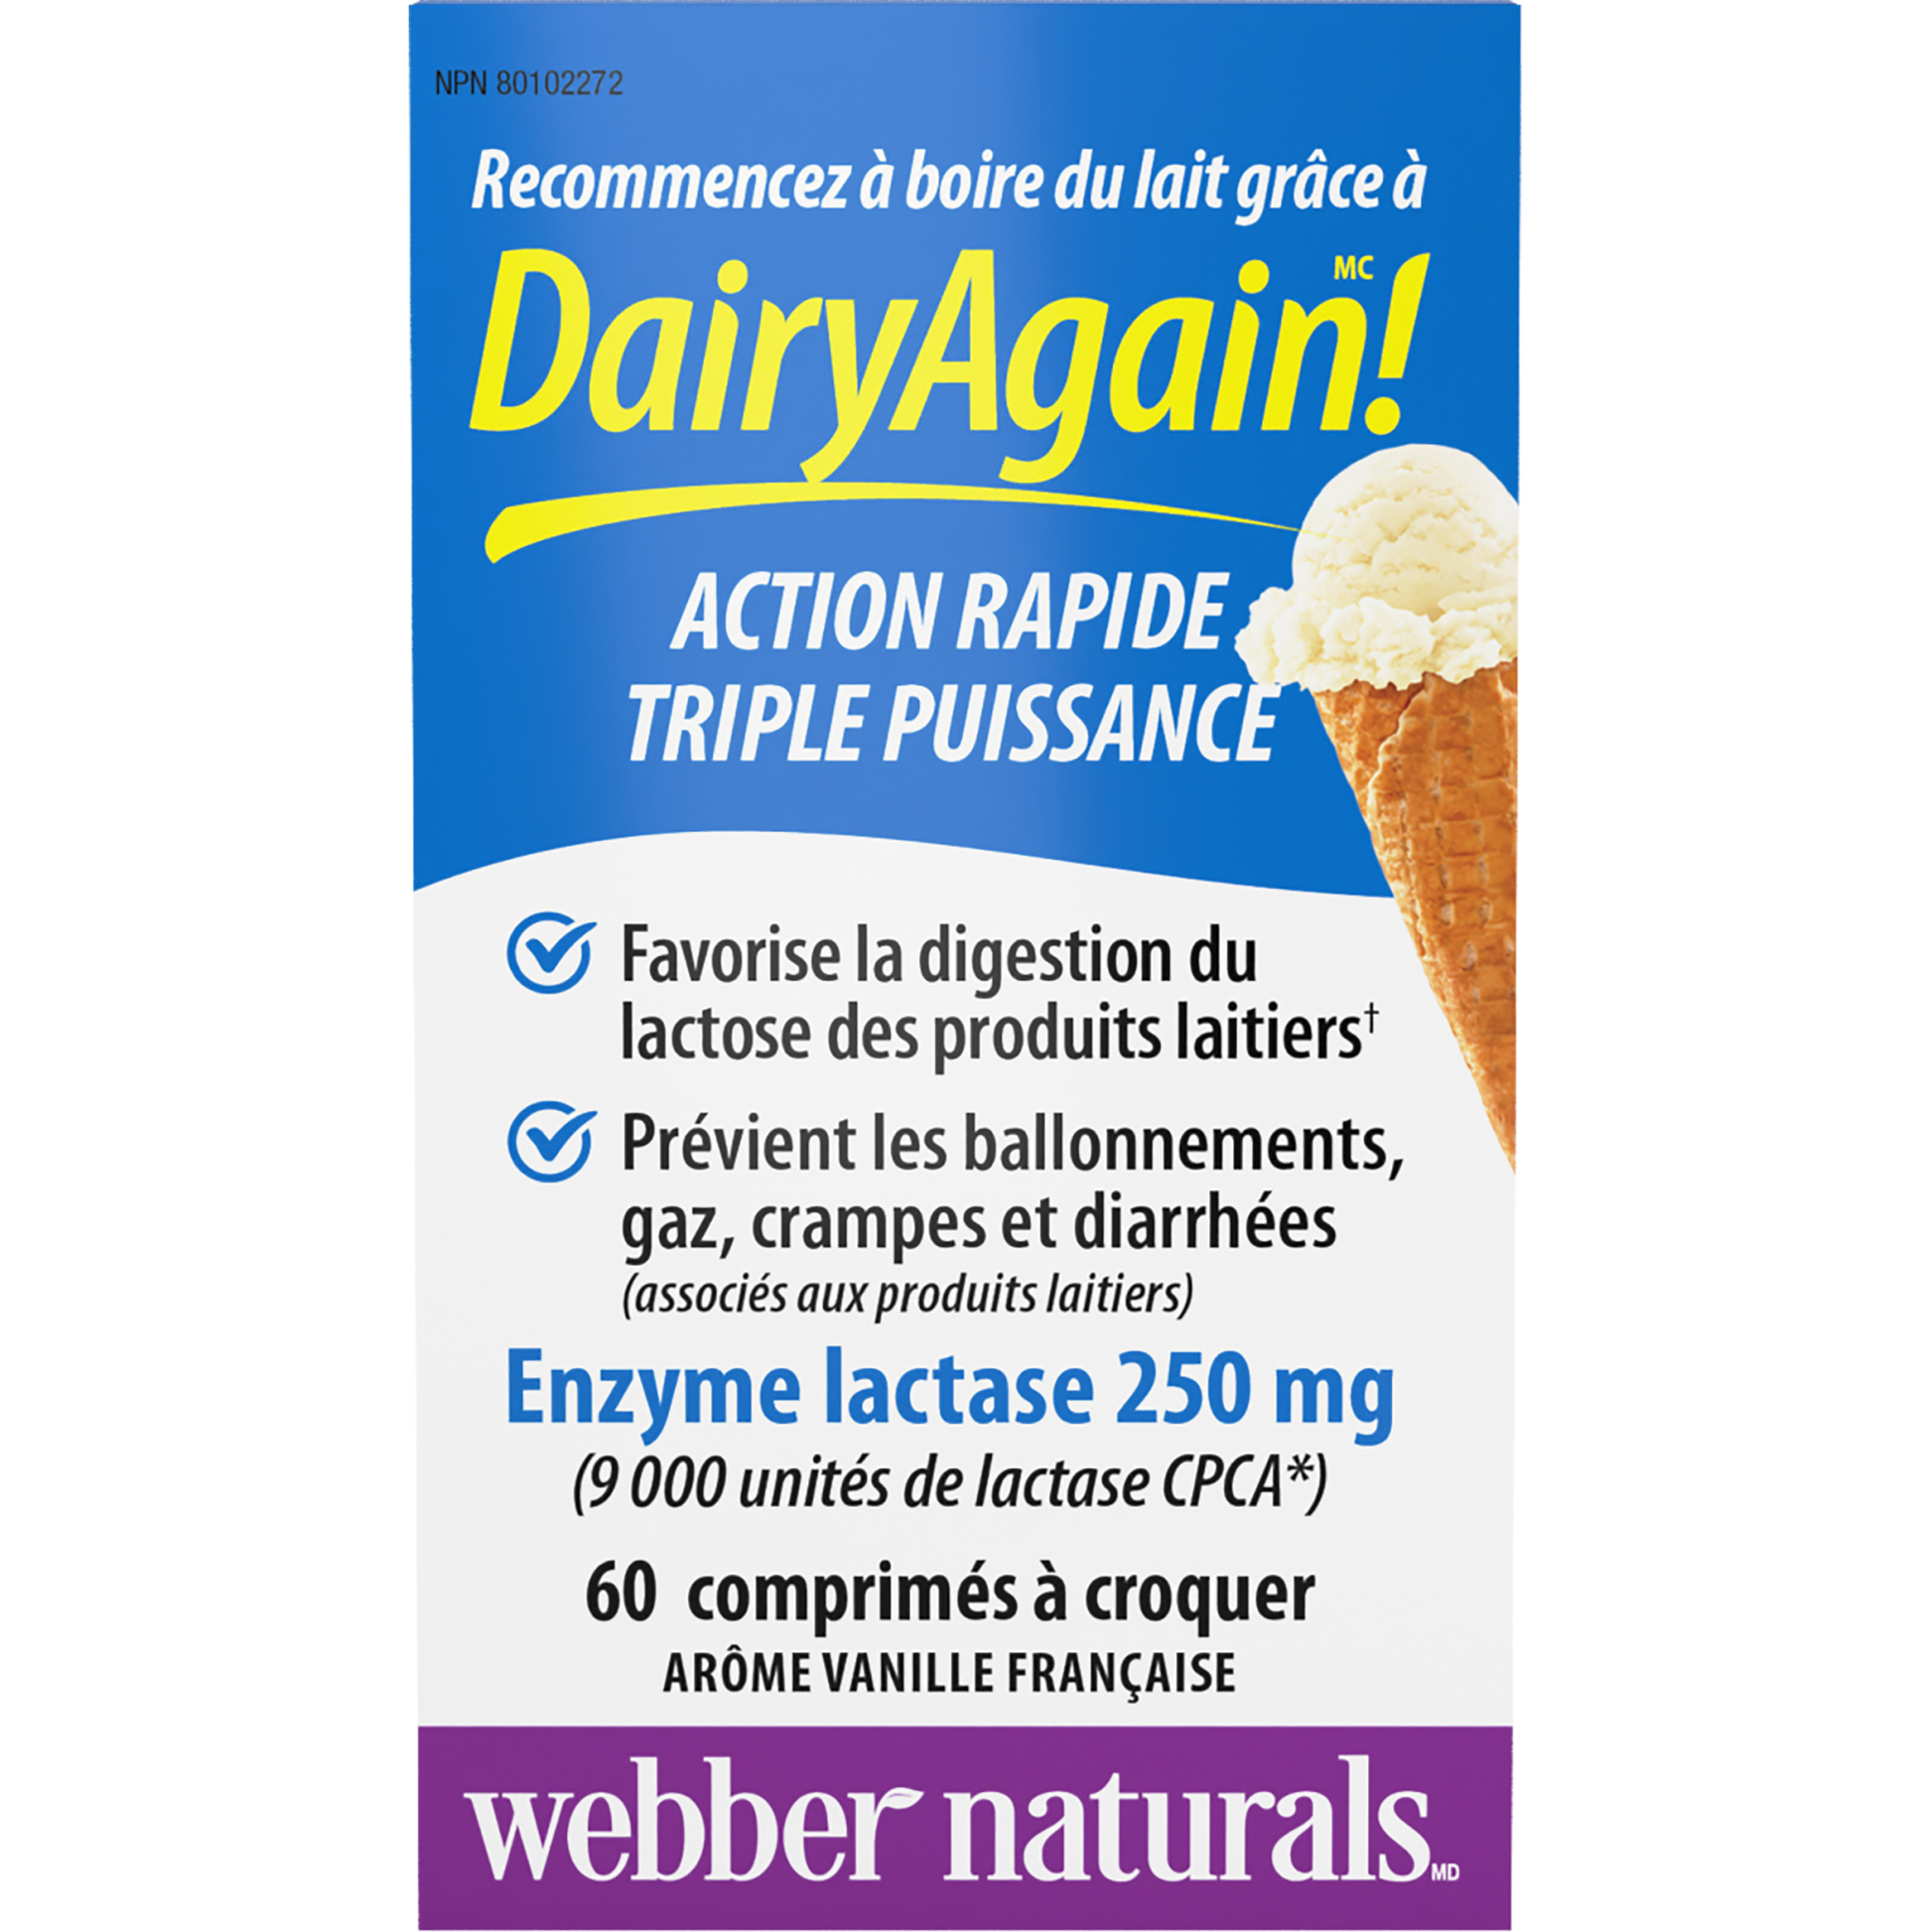 Dairy Again!(MC) Enzyme lactase 250 mg arôme vanille française for Webber Naturals|v|hi-res|WN3696